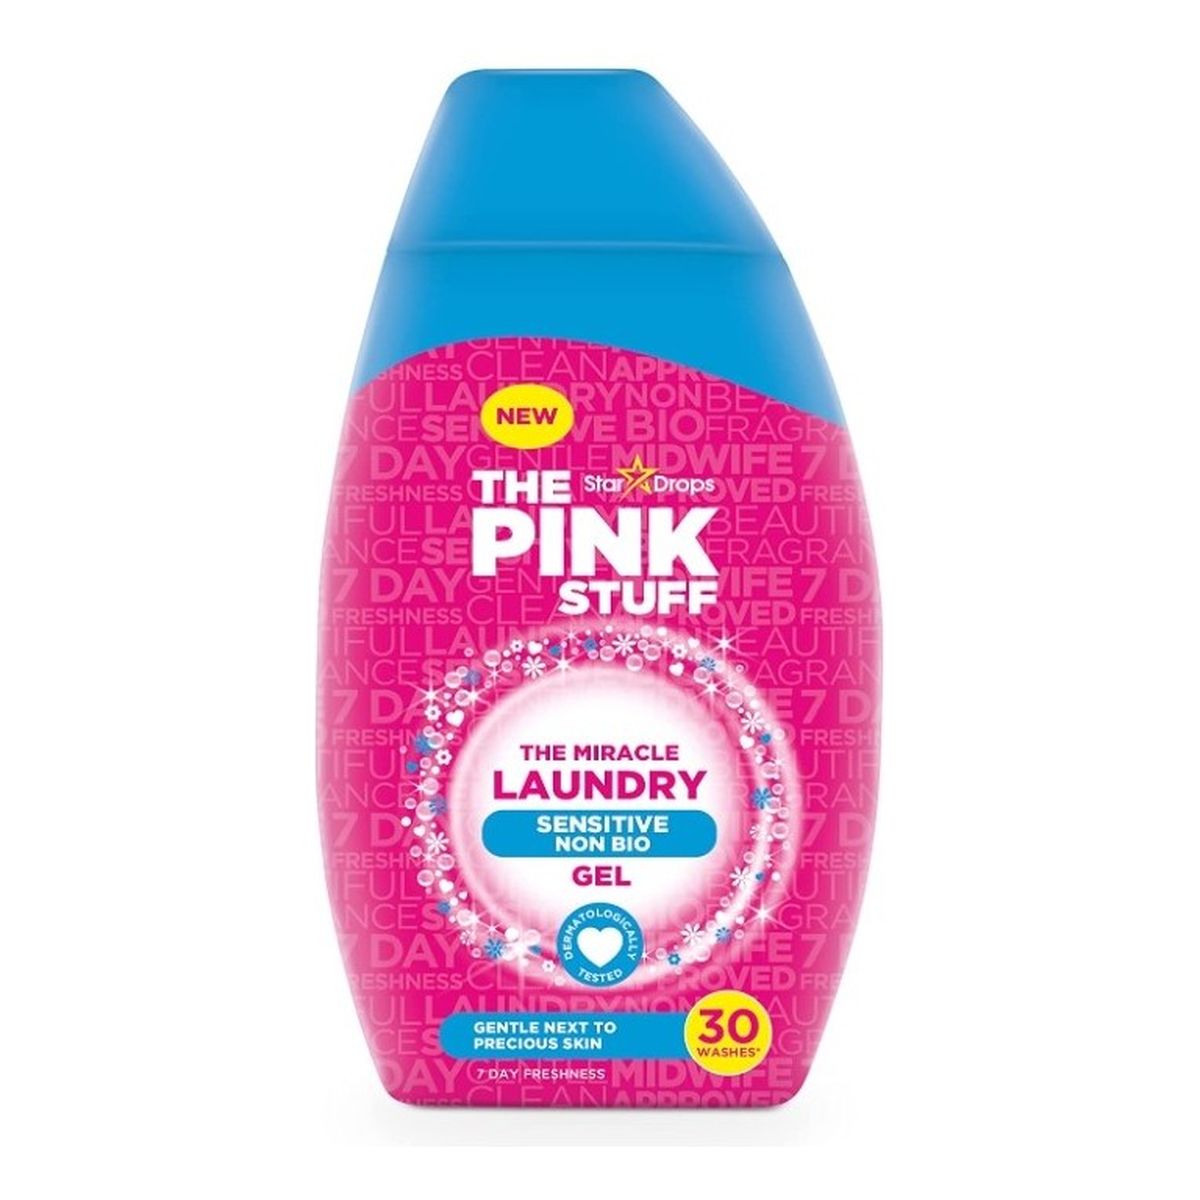 Star Drops The Pink Stuff Żel do prania Laundry Sensitive Gel 30 prań 900ml